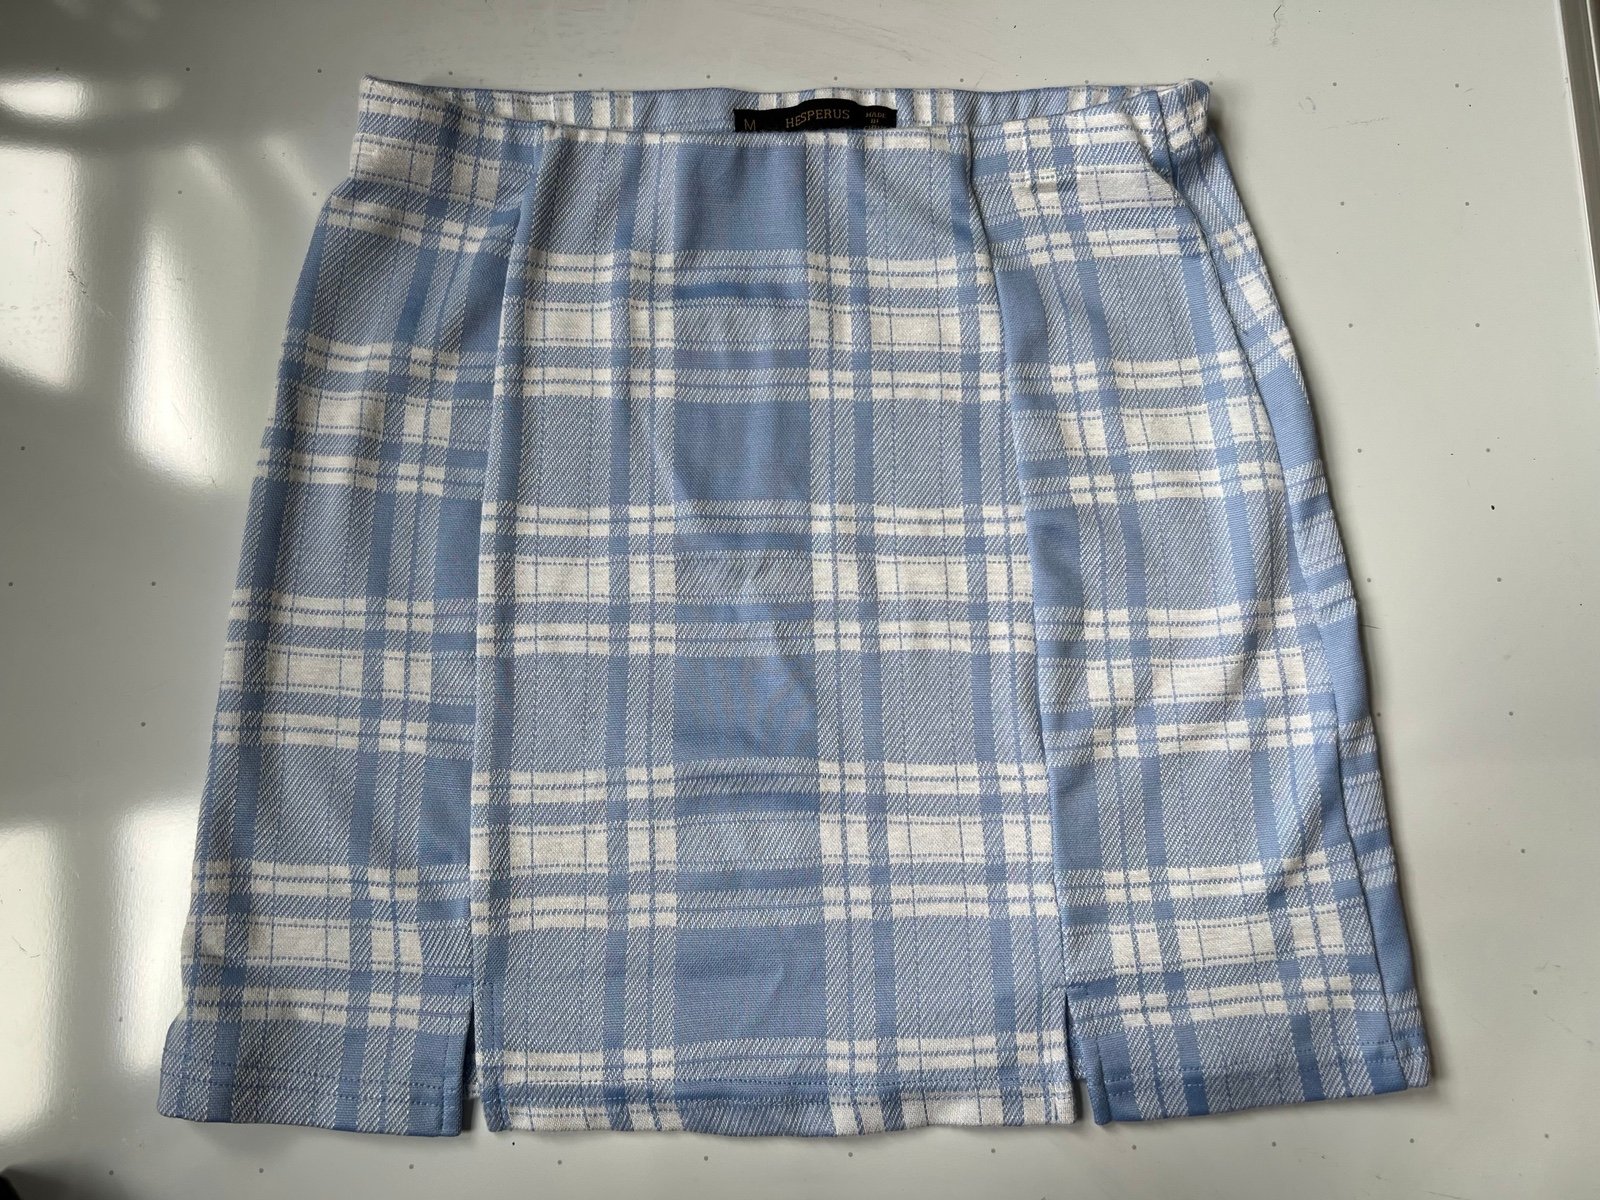 Wholesale price Plaid Skirt Ljdu8PqTR New Style